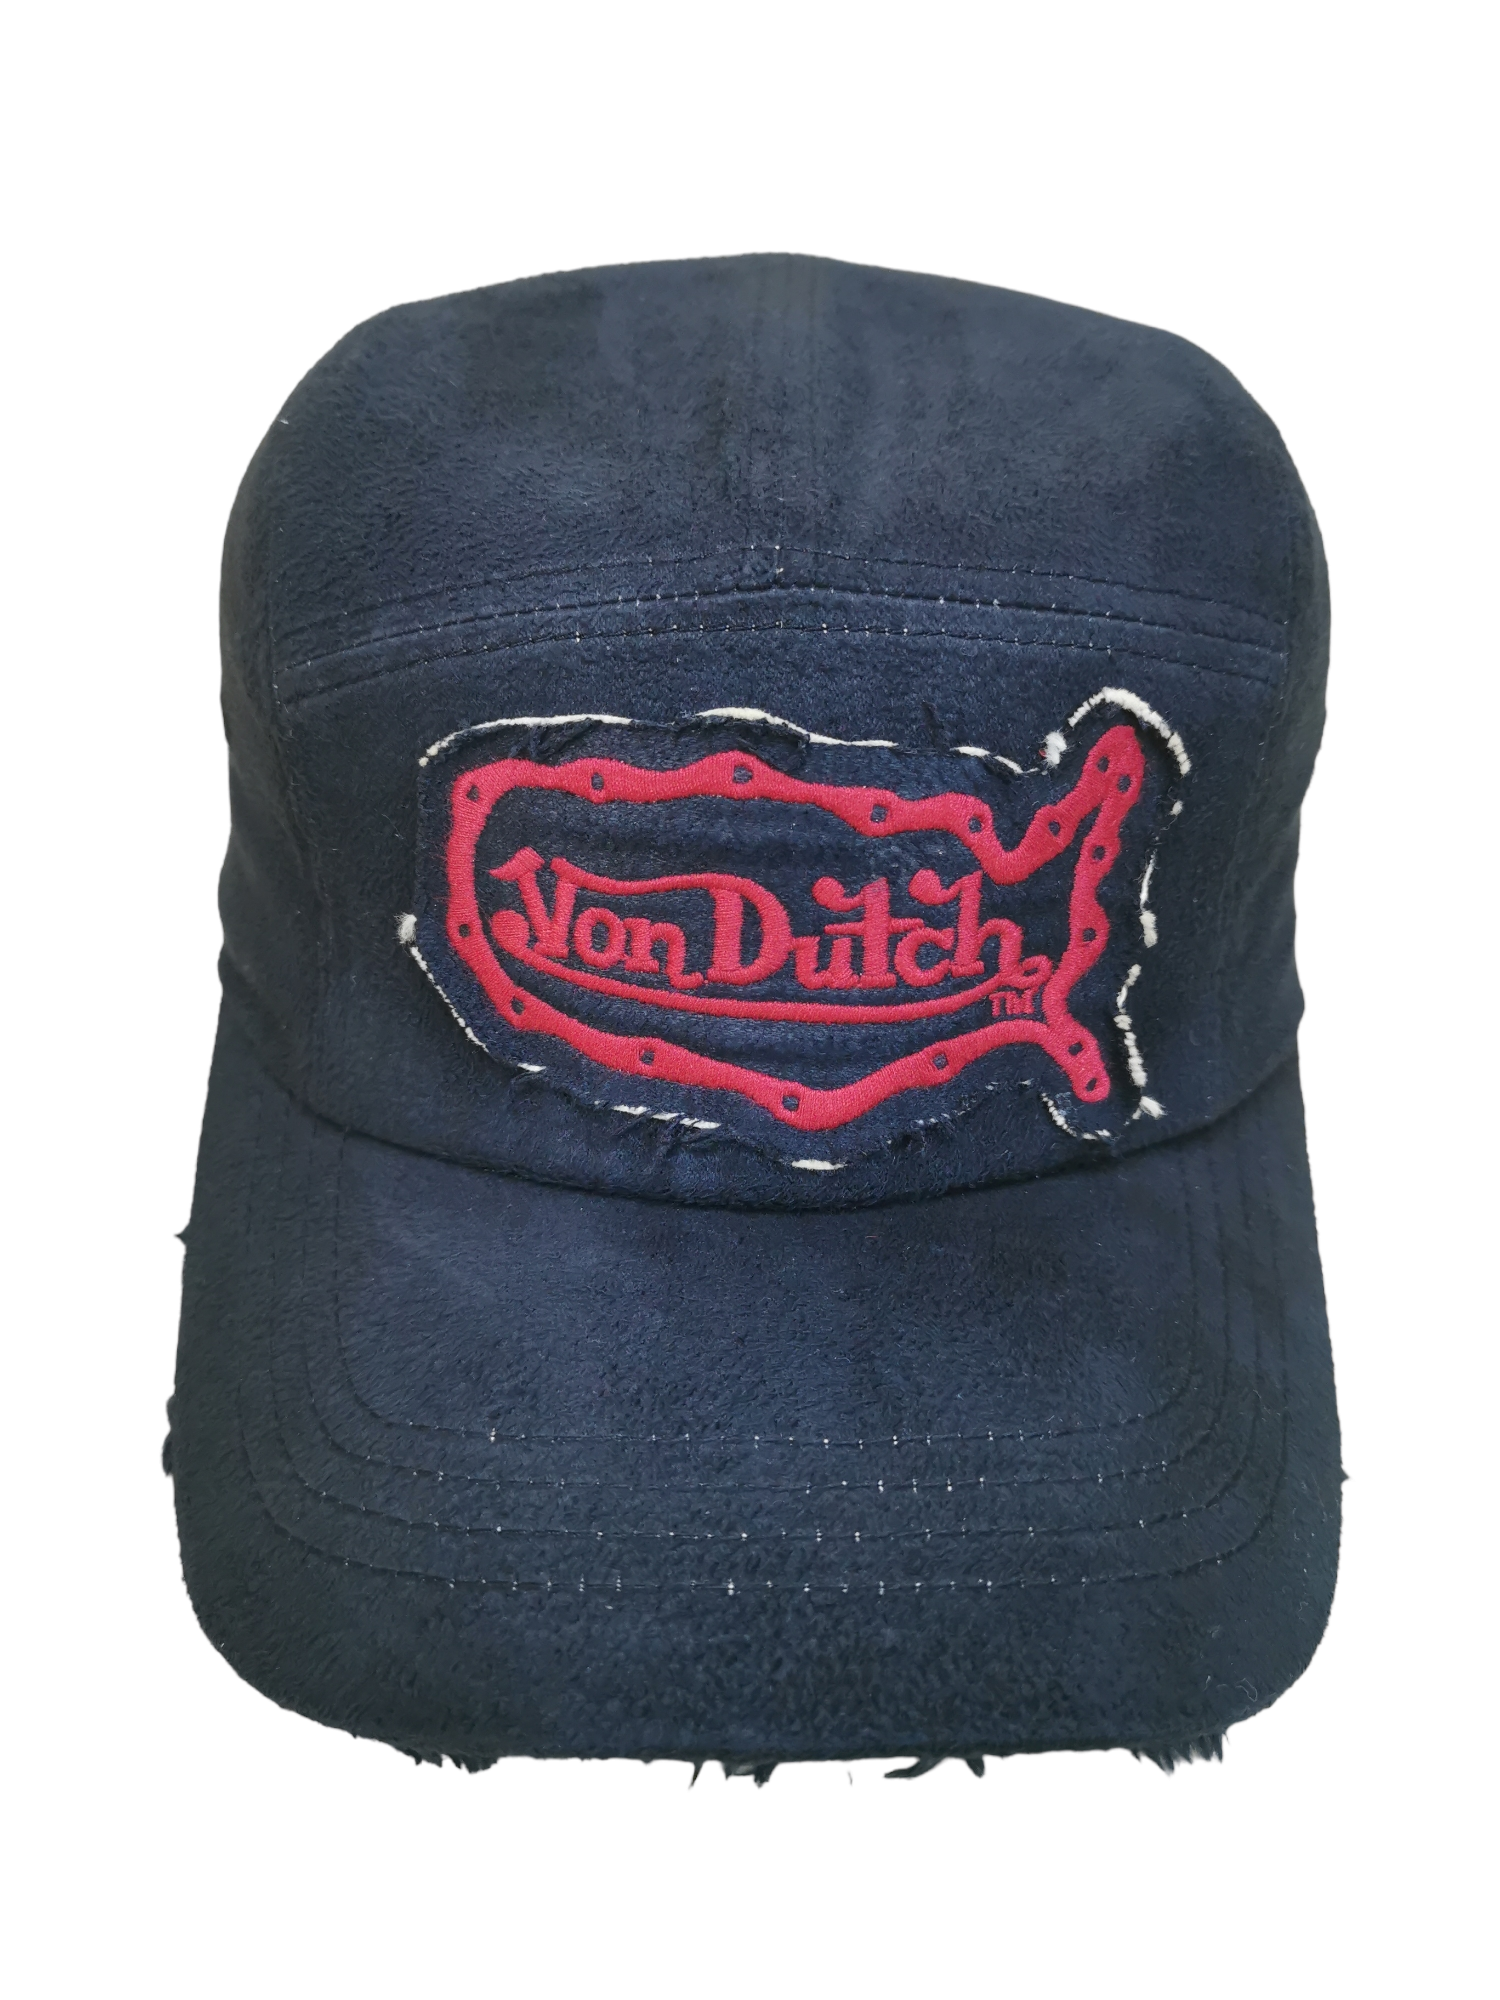 Other Designers Leather - VINTAGE VON DUTCH LEATHER 5 PANEL HAT CAP, type_of_hat_cap